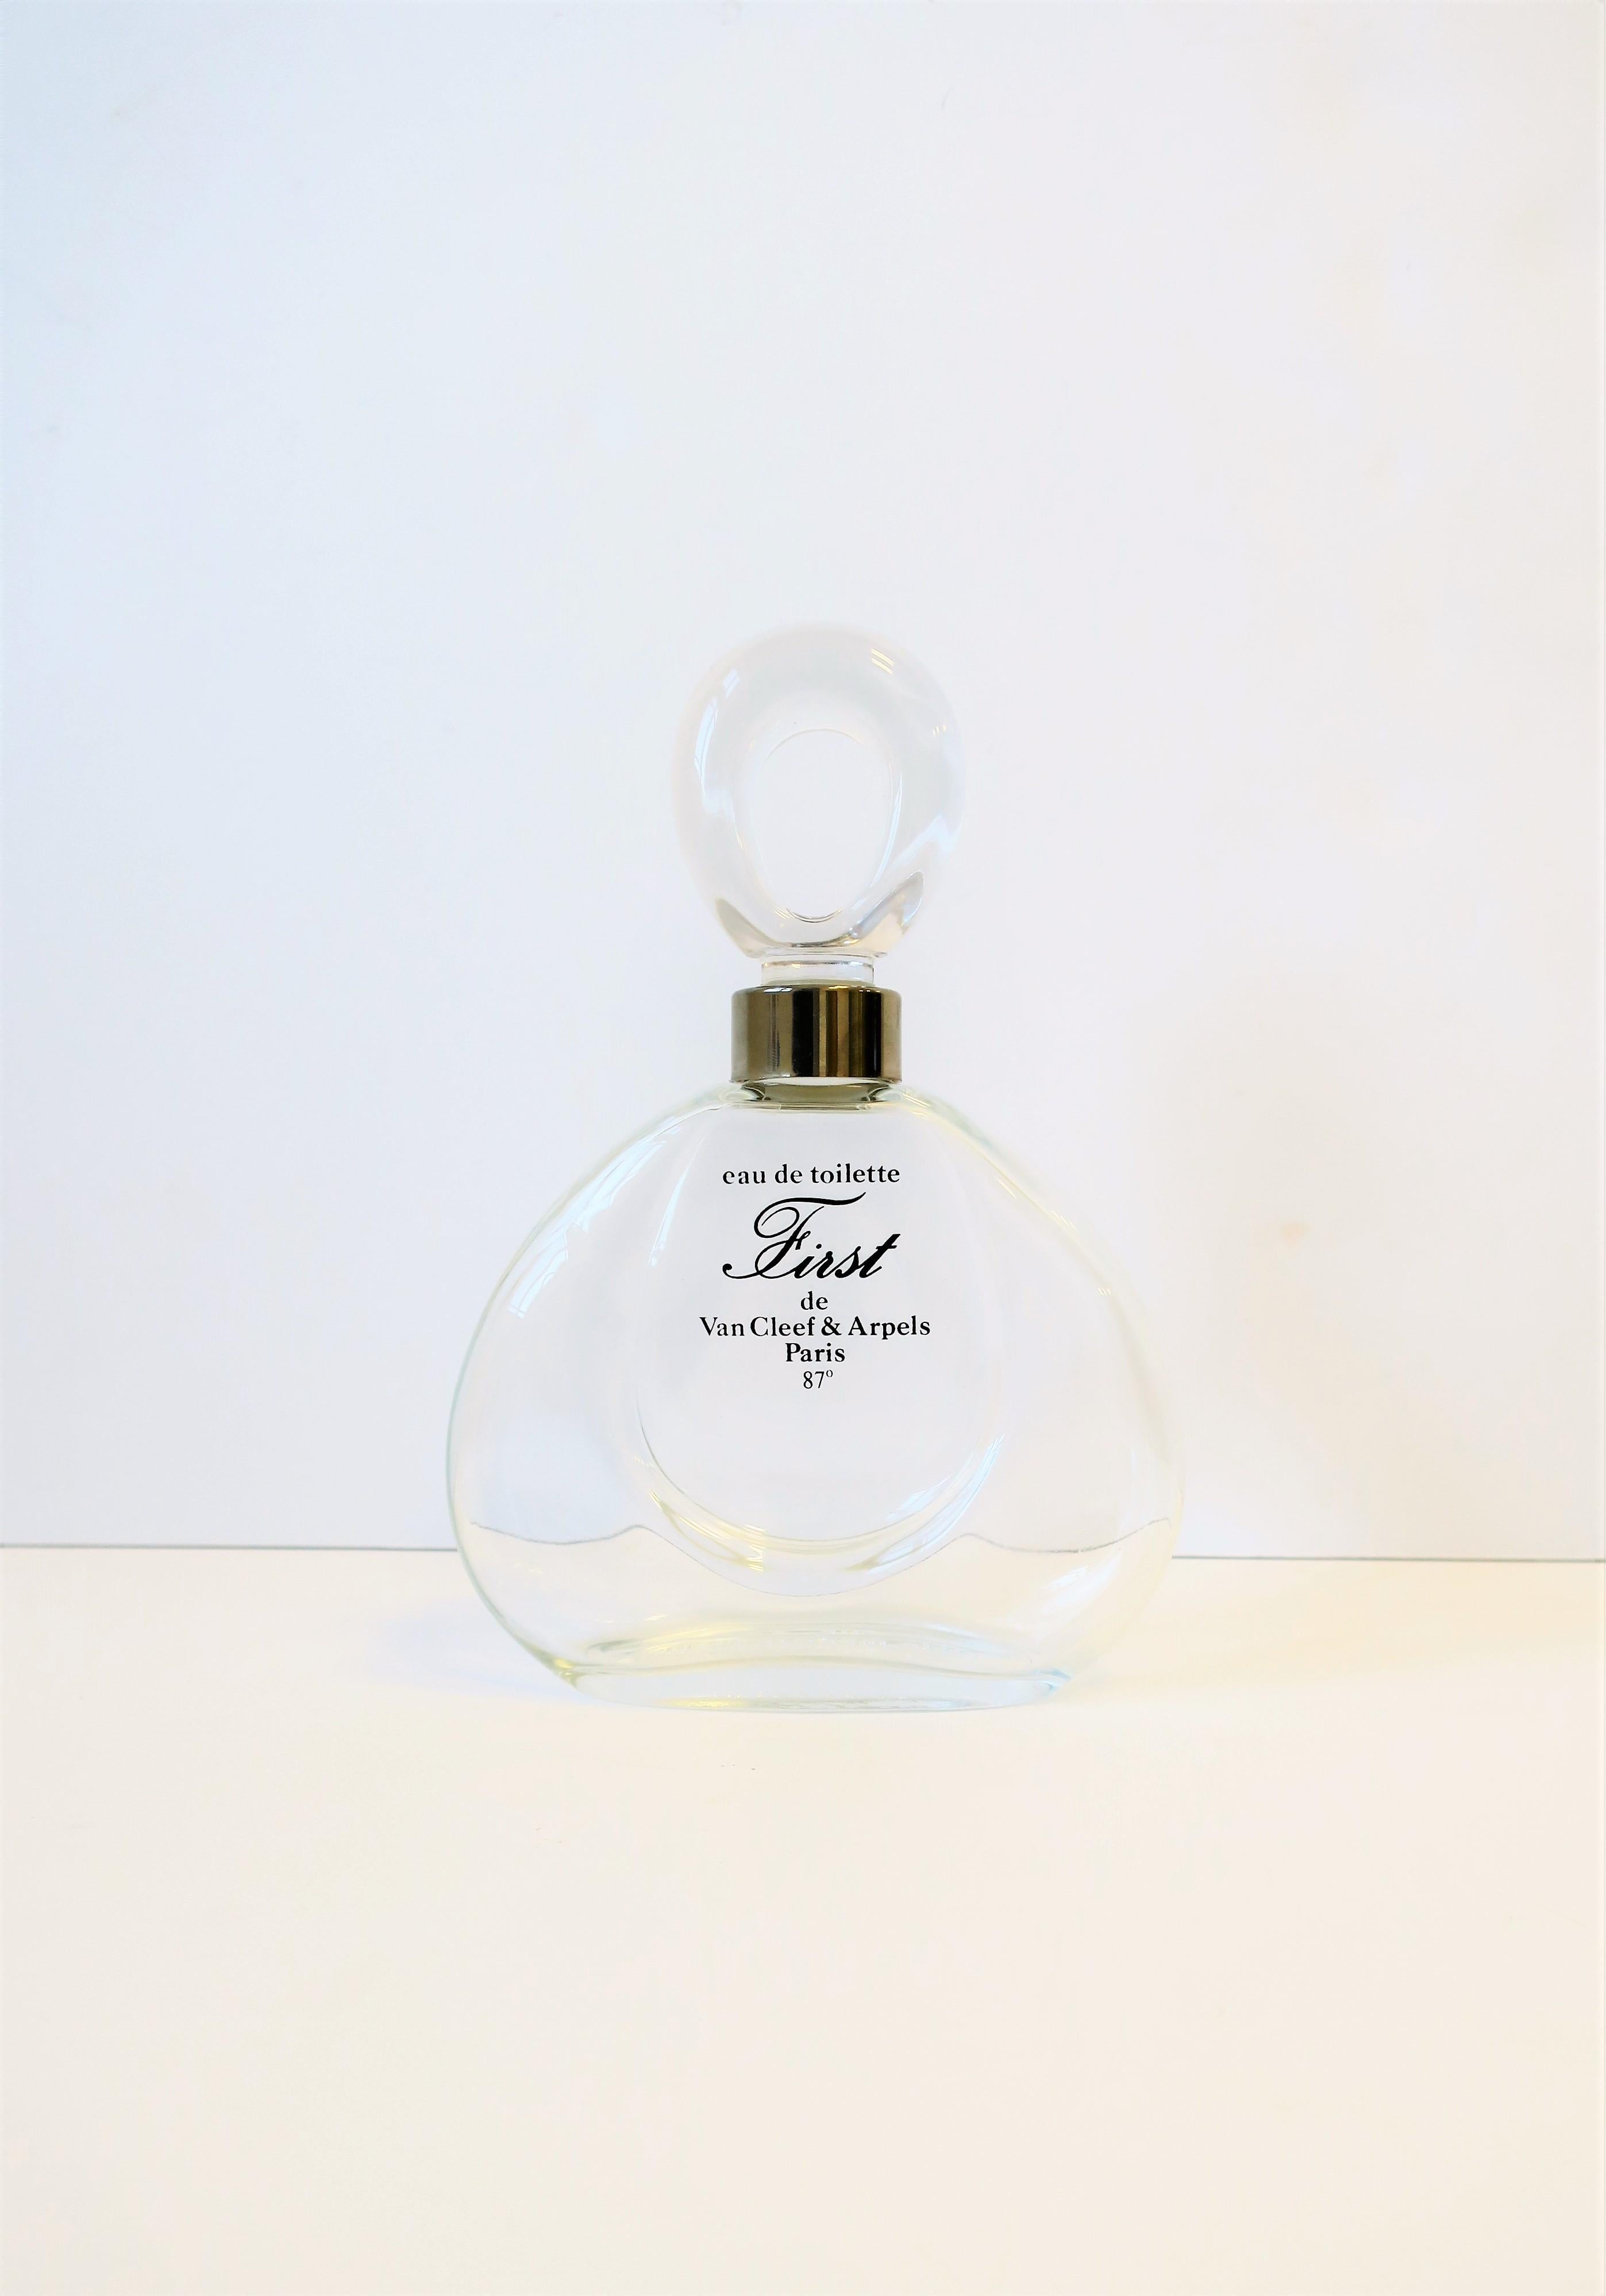 van cleef and arpels perfume white bottle